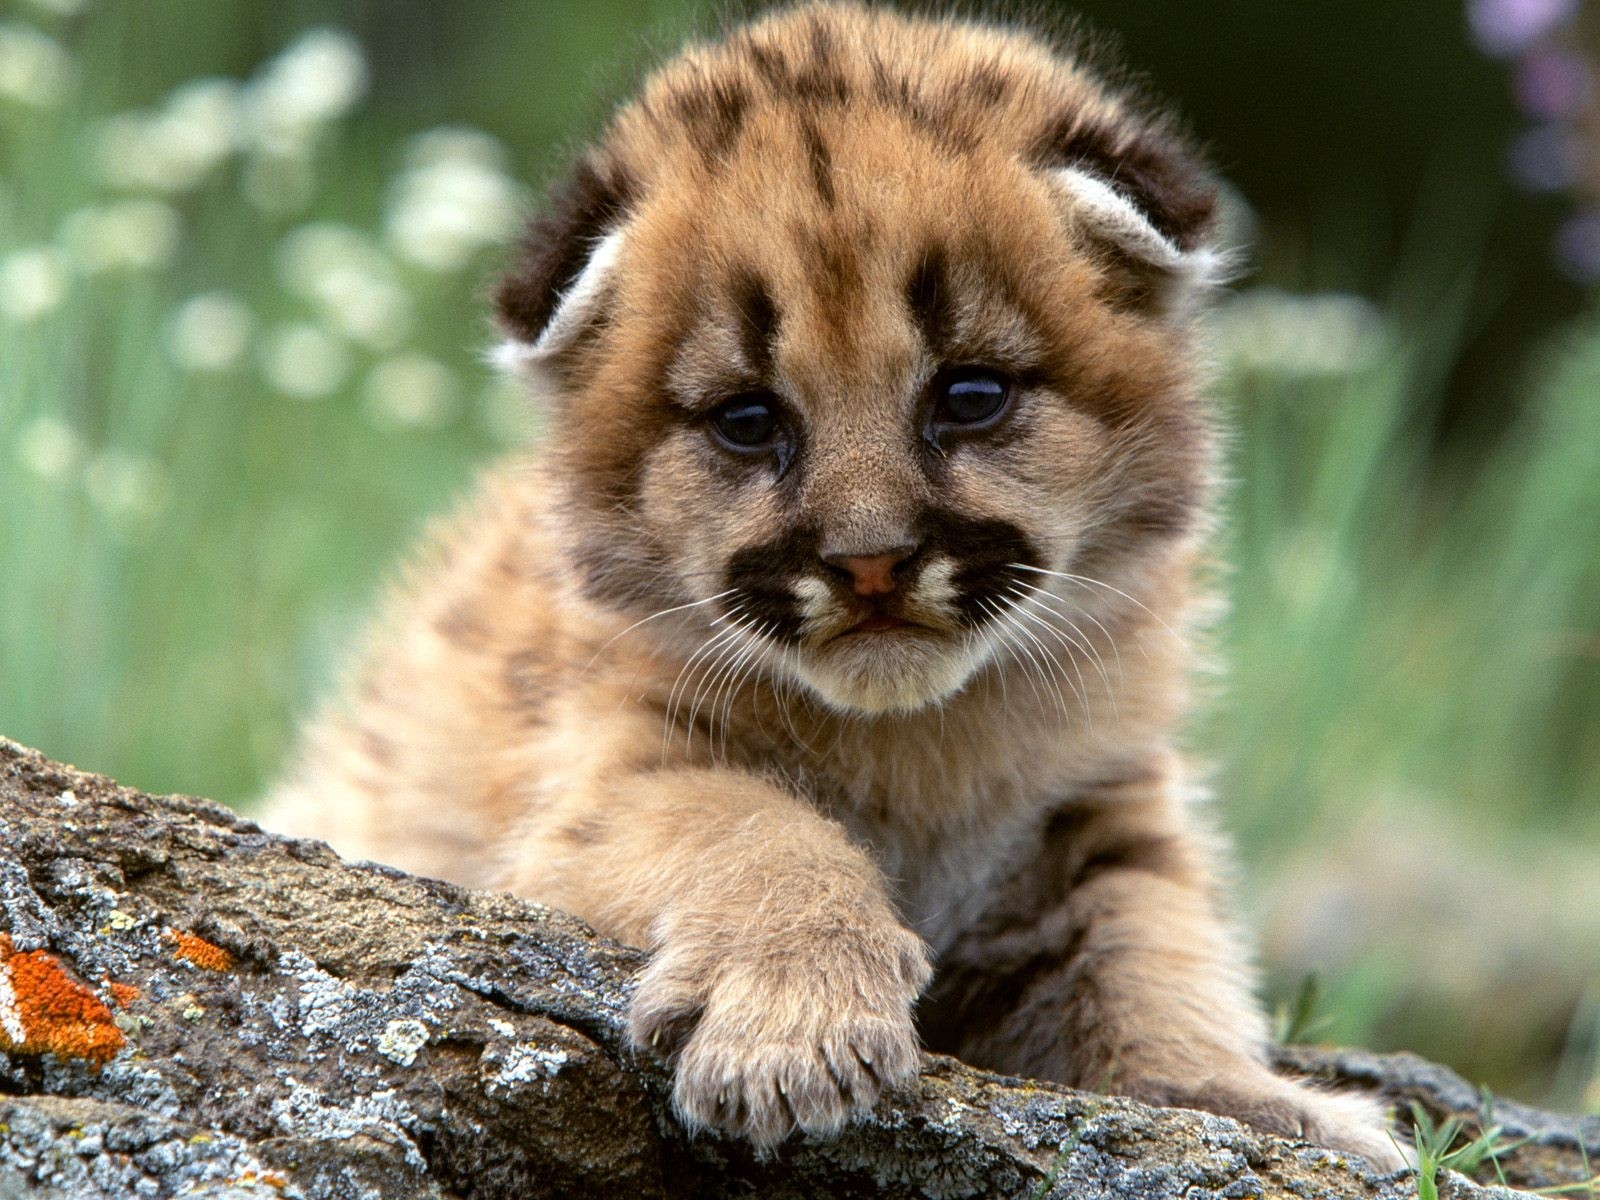 Photo of a little cub